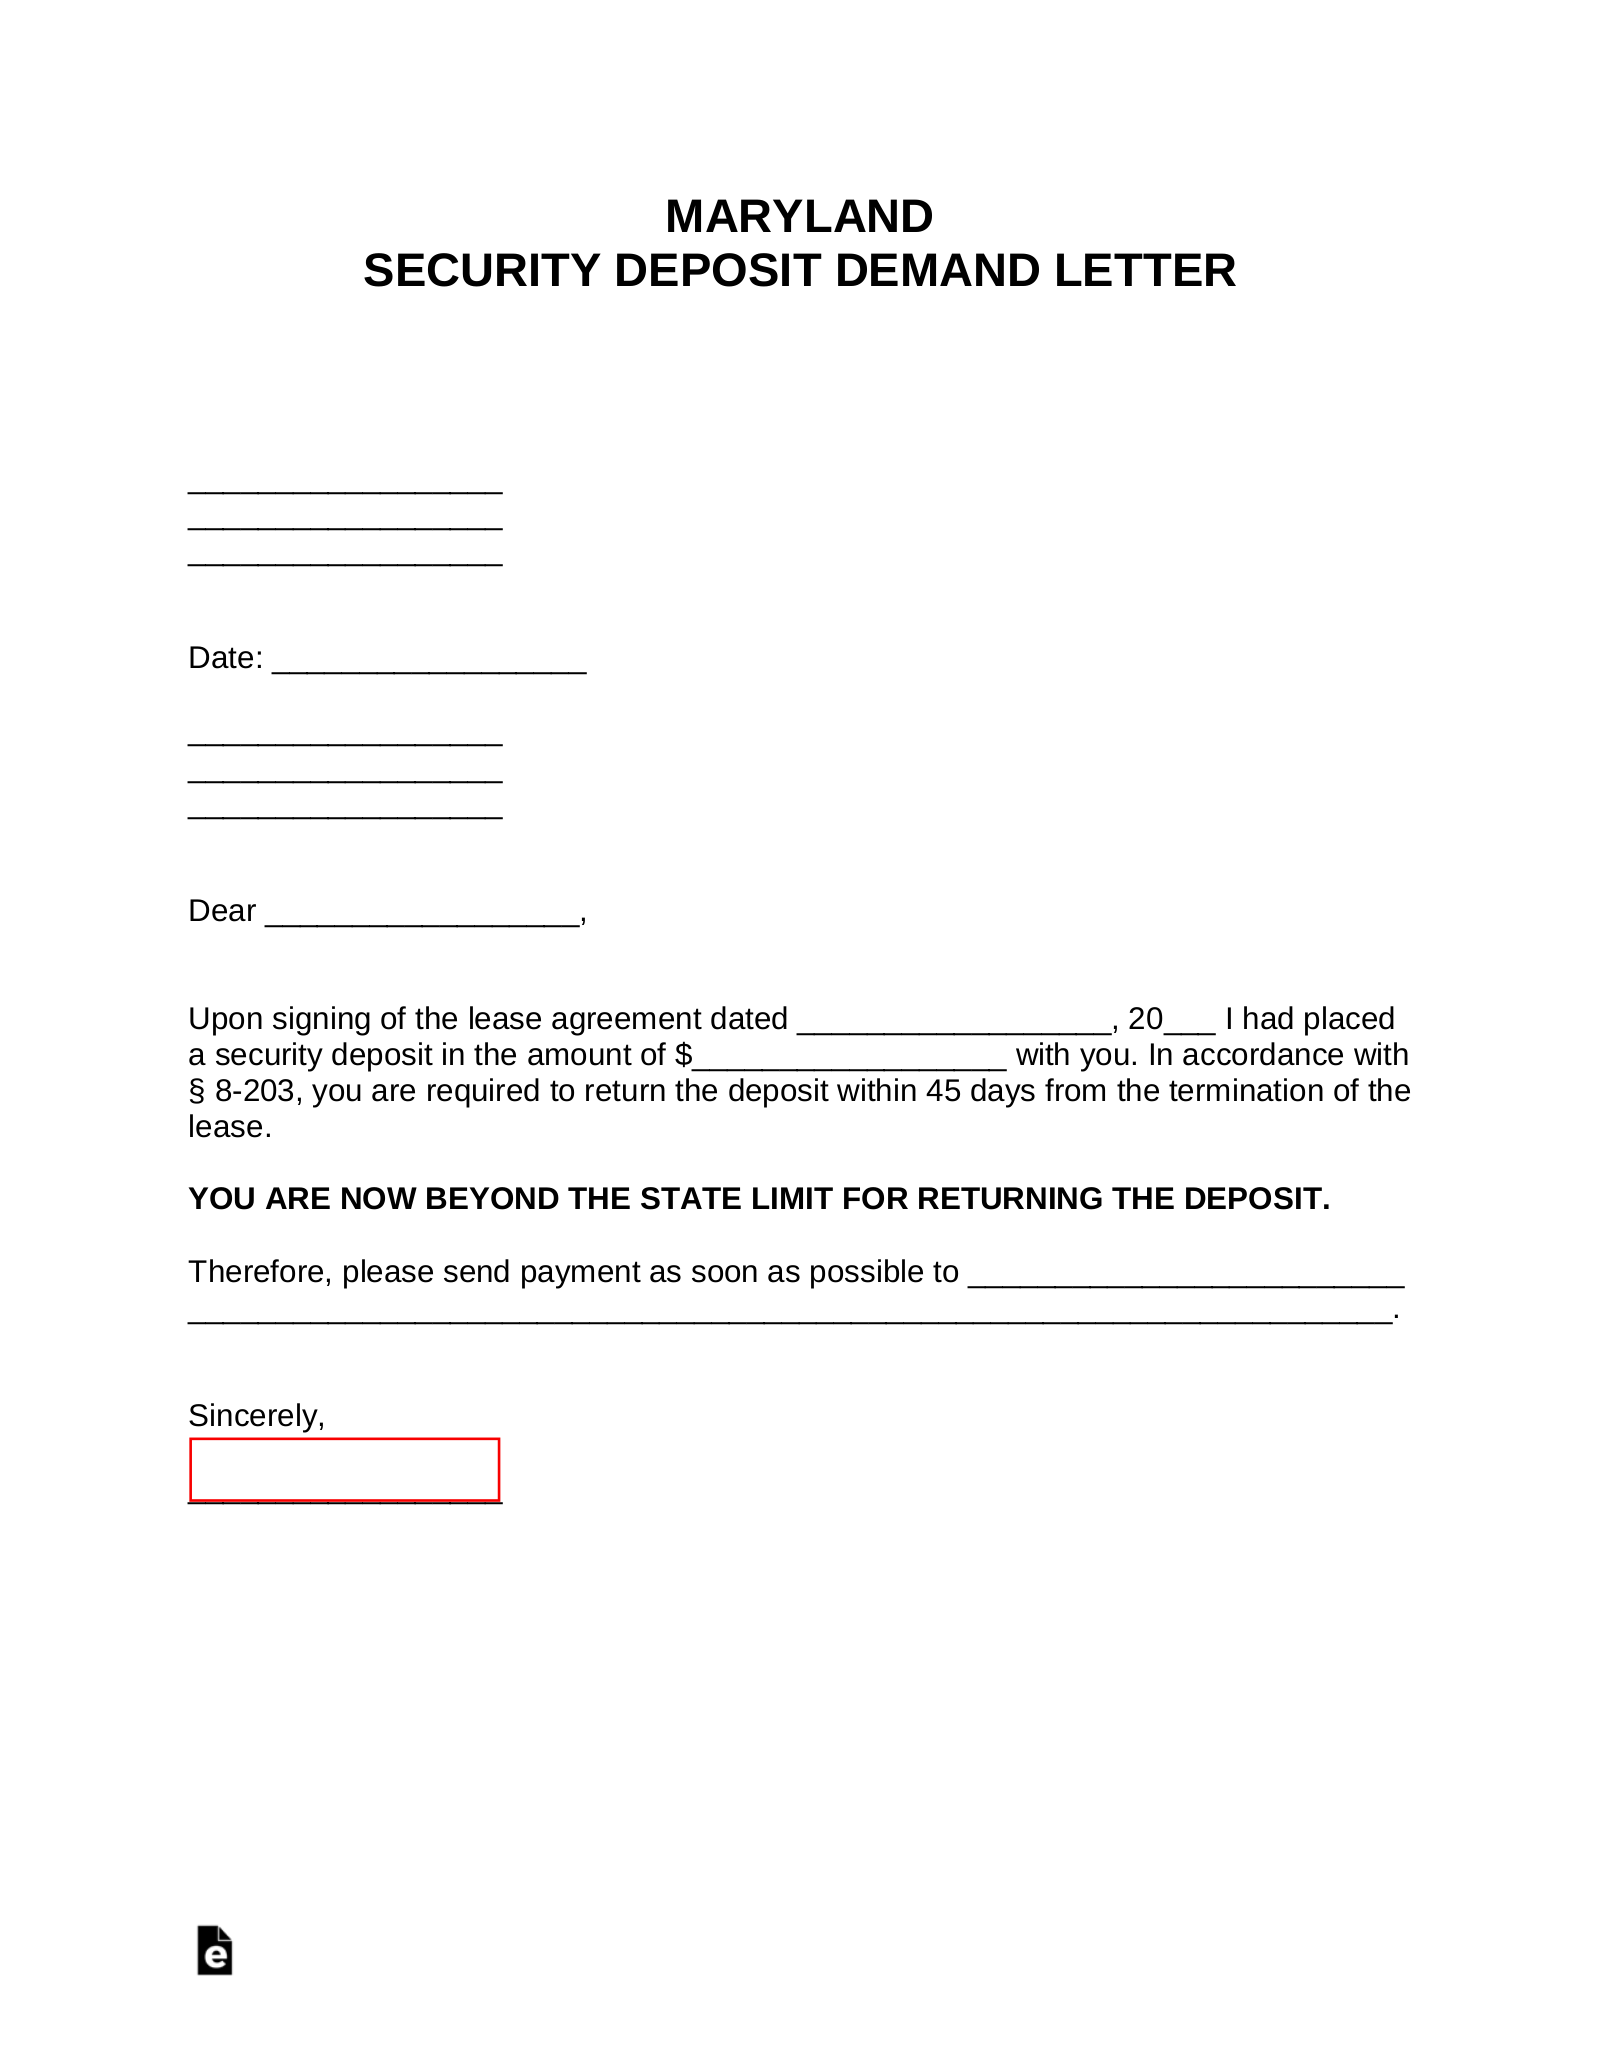 Maryland Security Deposit Demand Letter